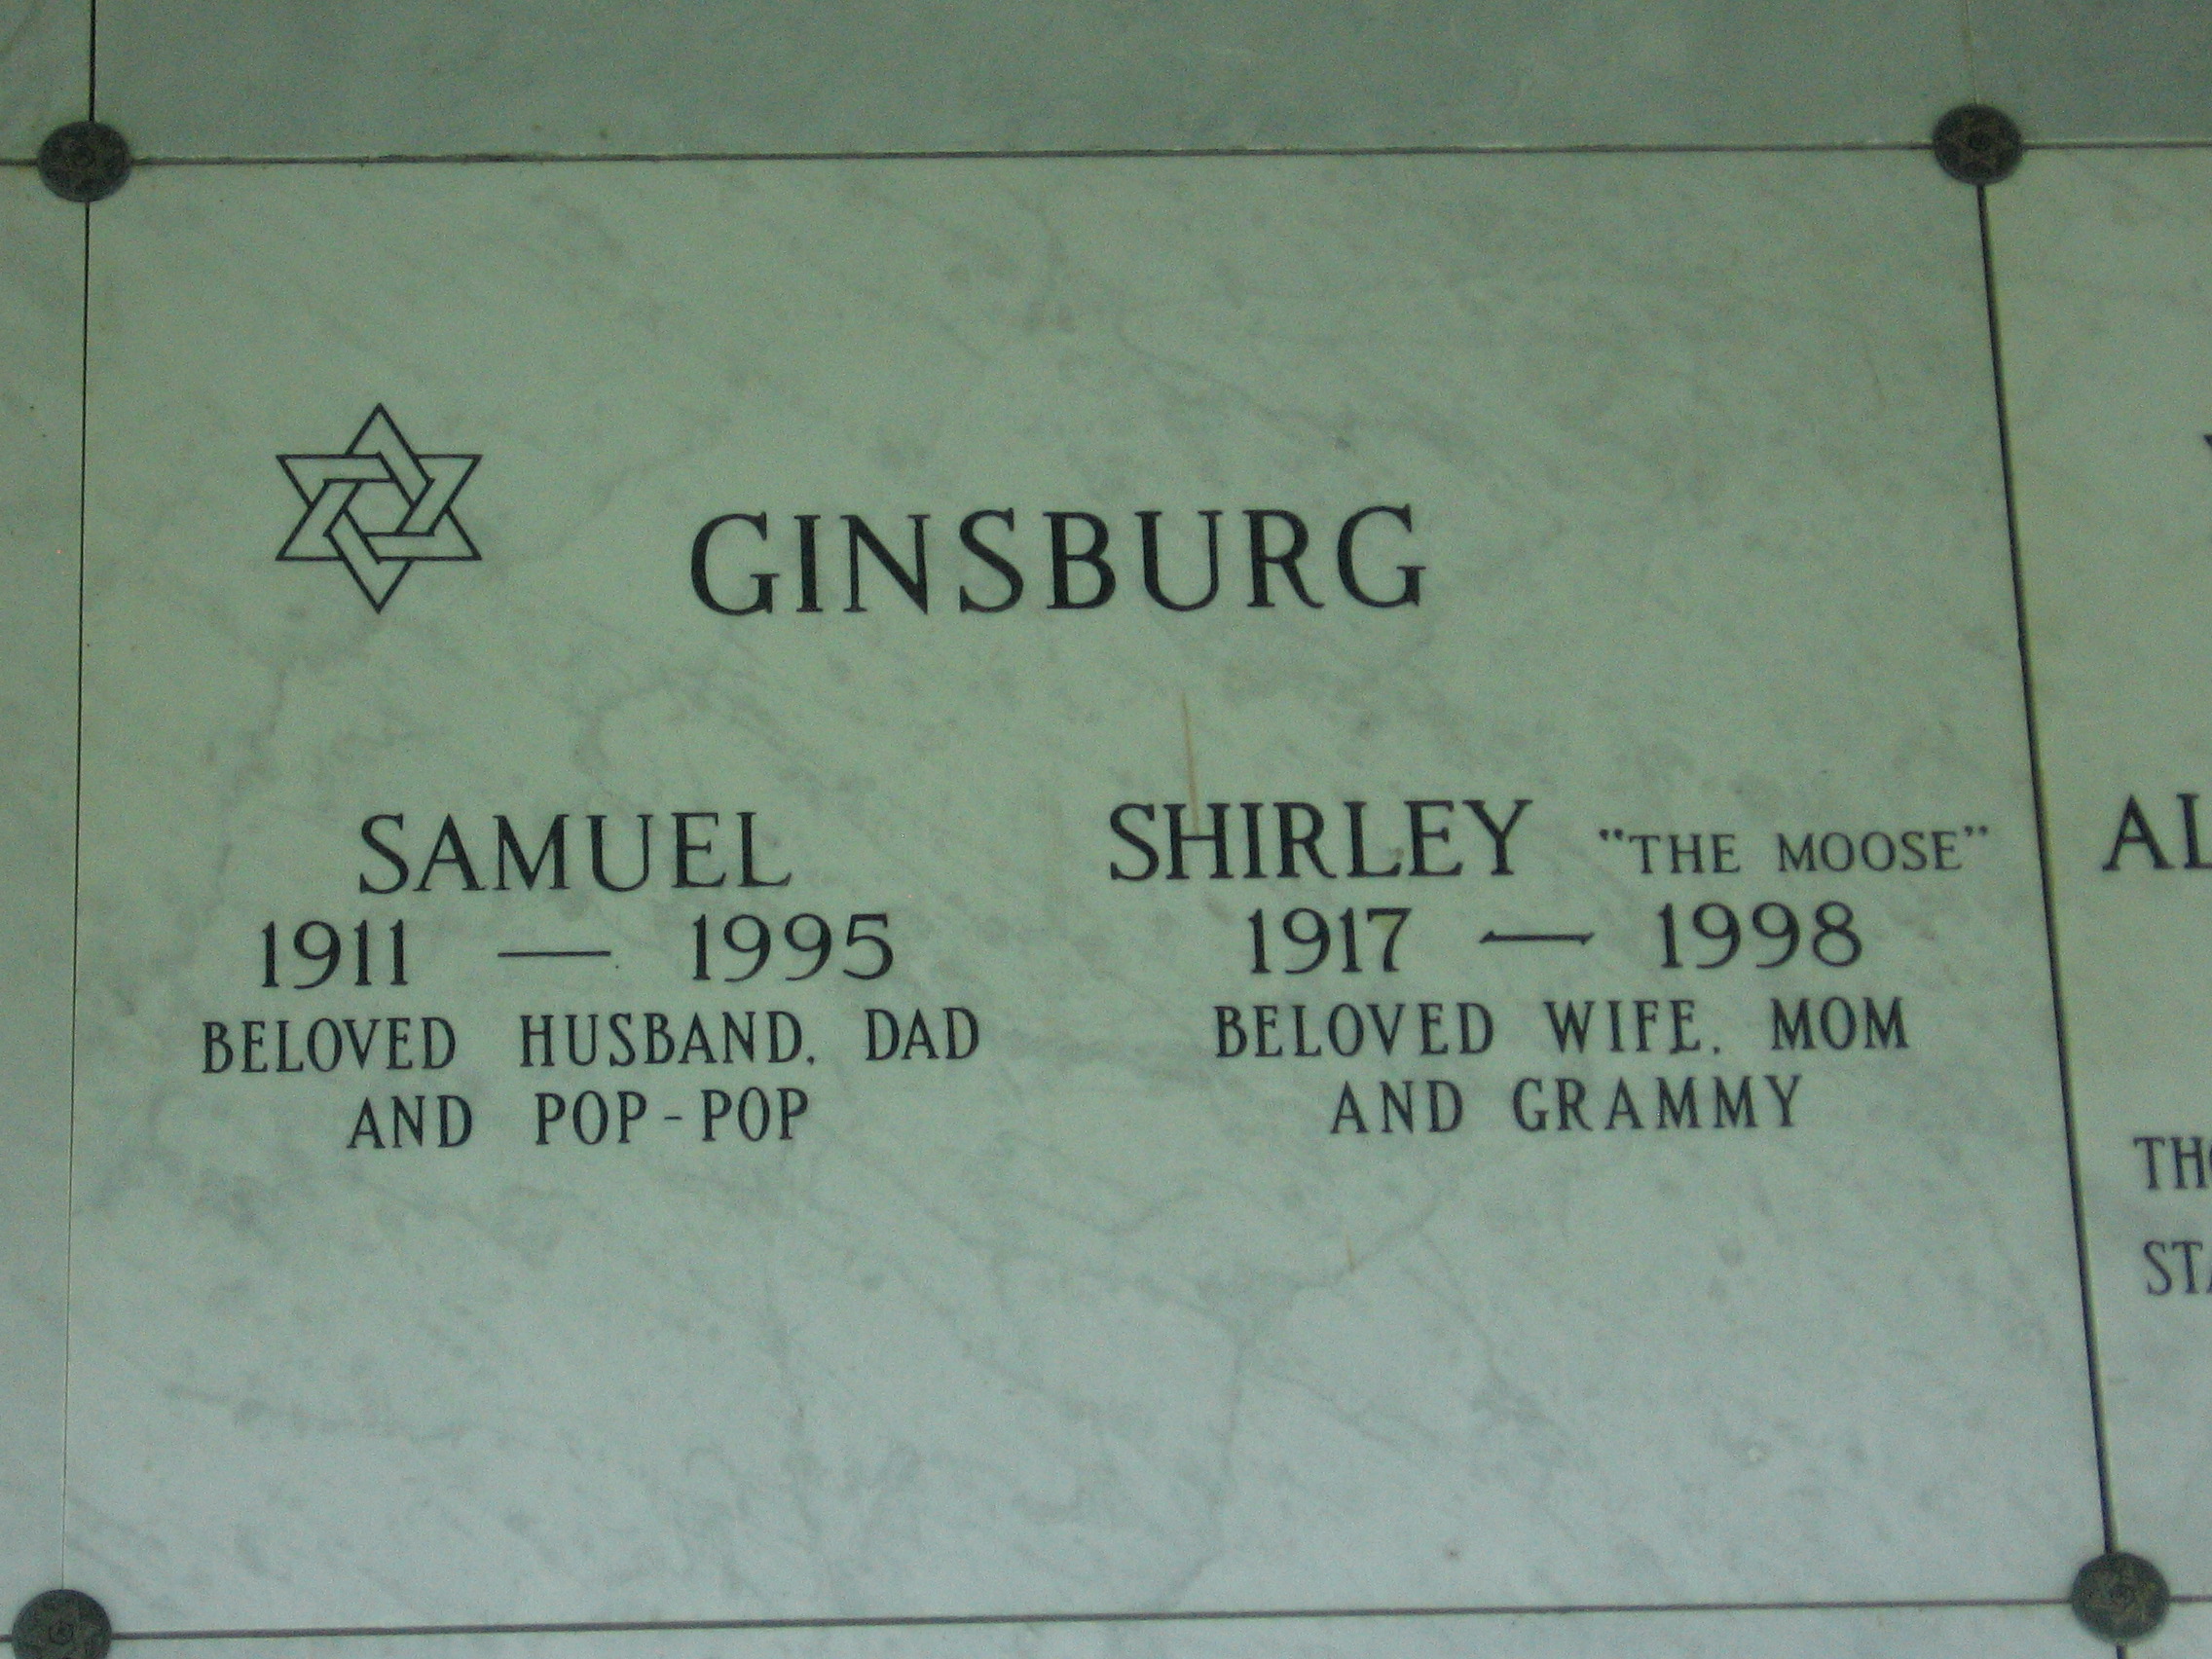 Shirley "The Moose" Ginsburg